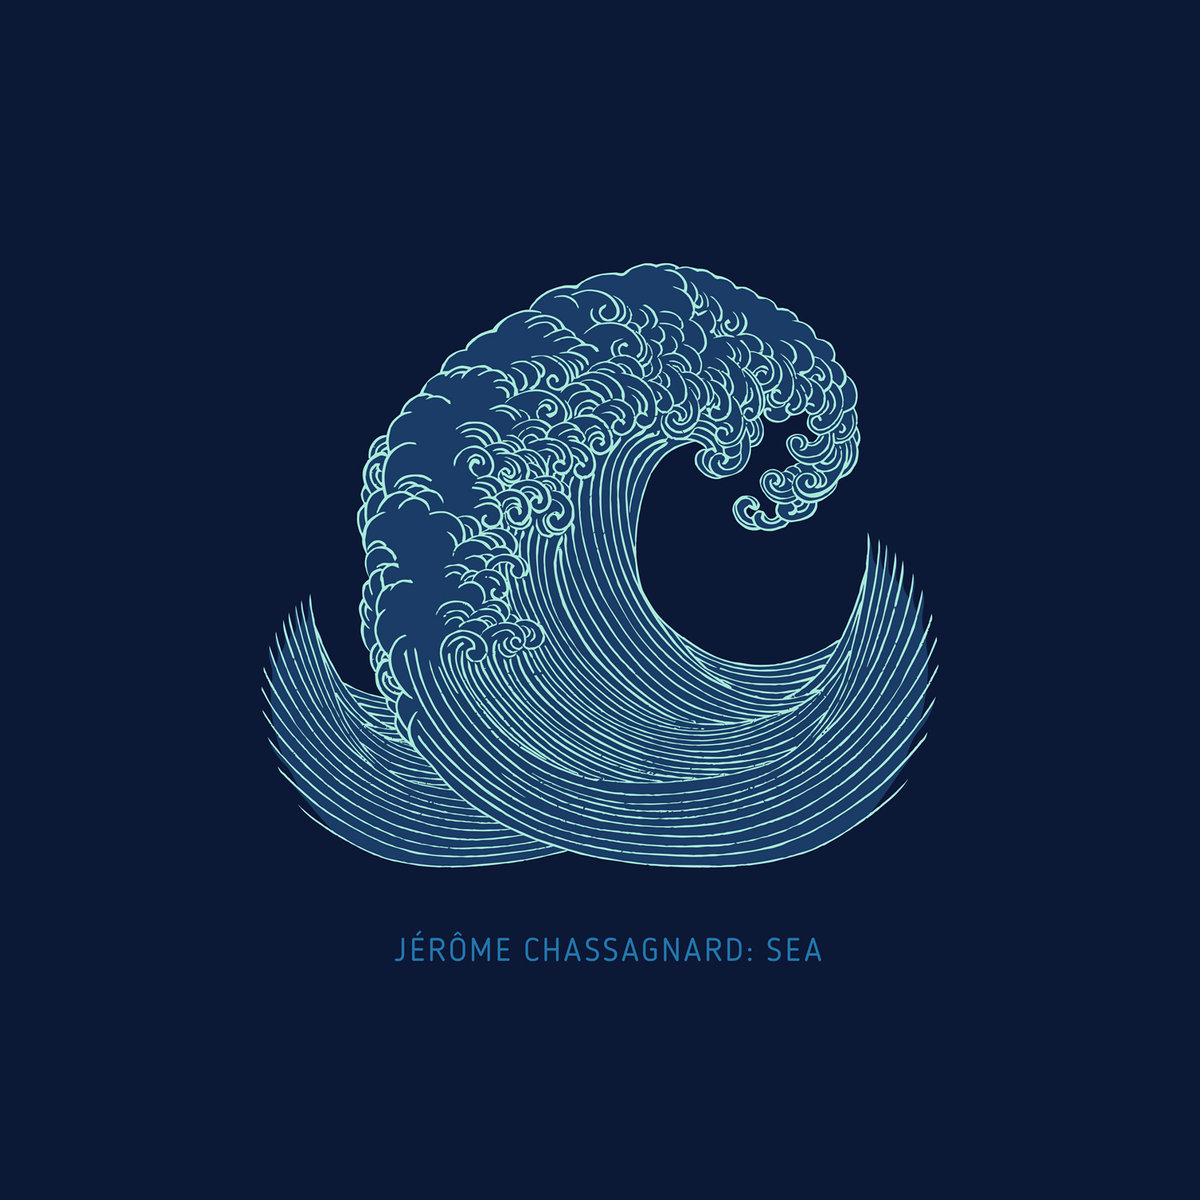 Jérôme Chassagnard, “Sea”